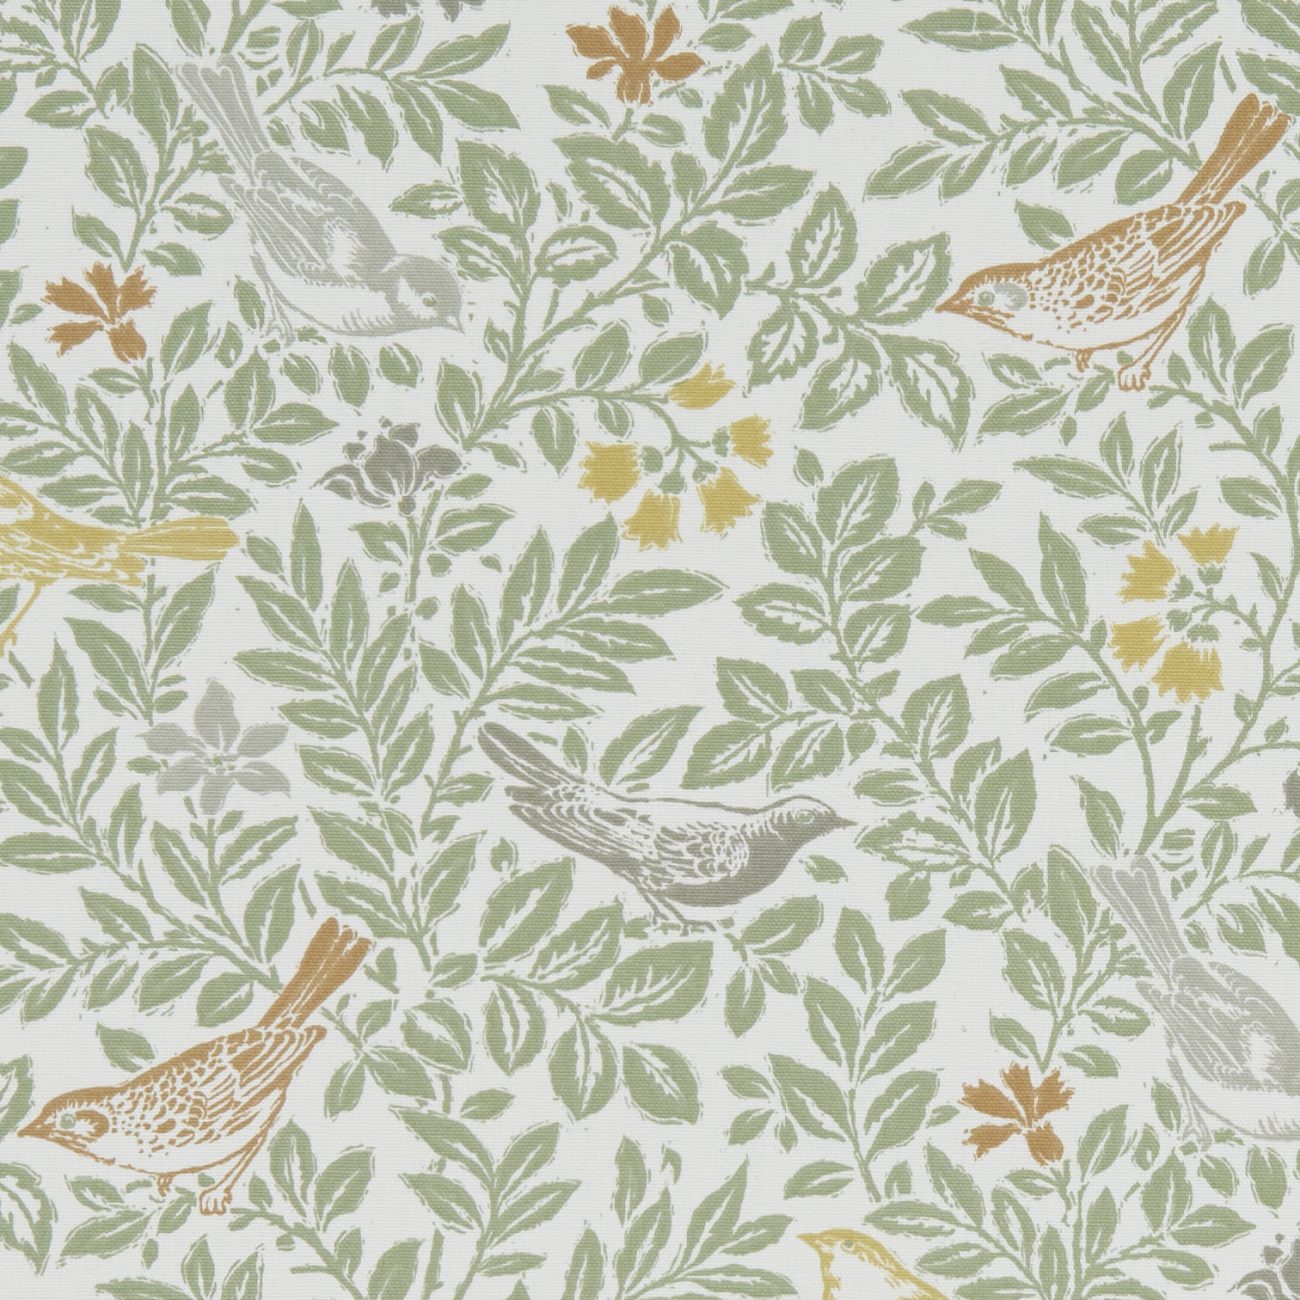 Bird Song Autumn Fabric by Studio G